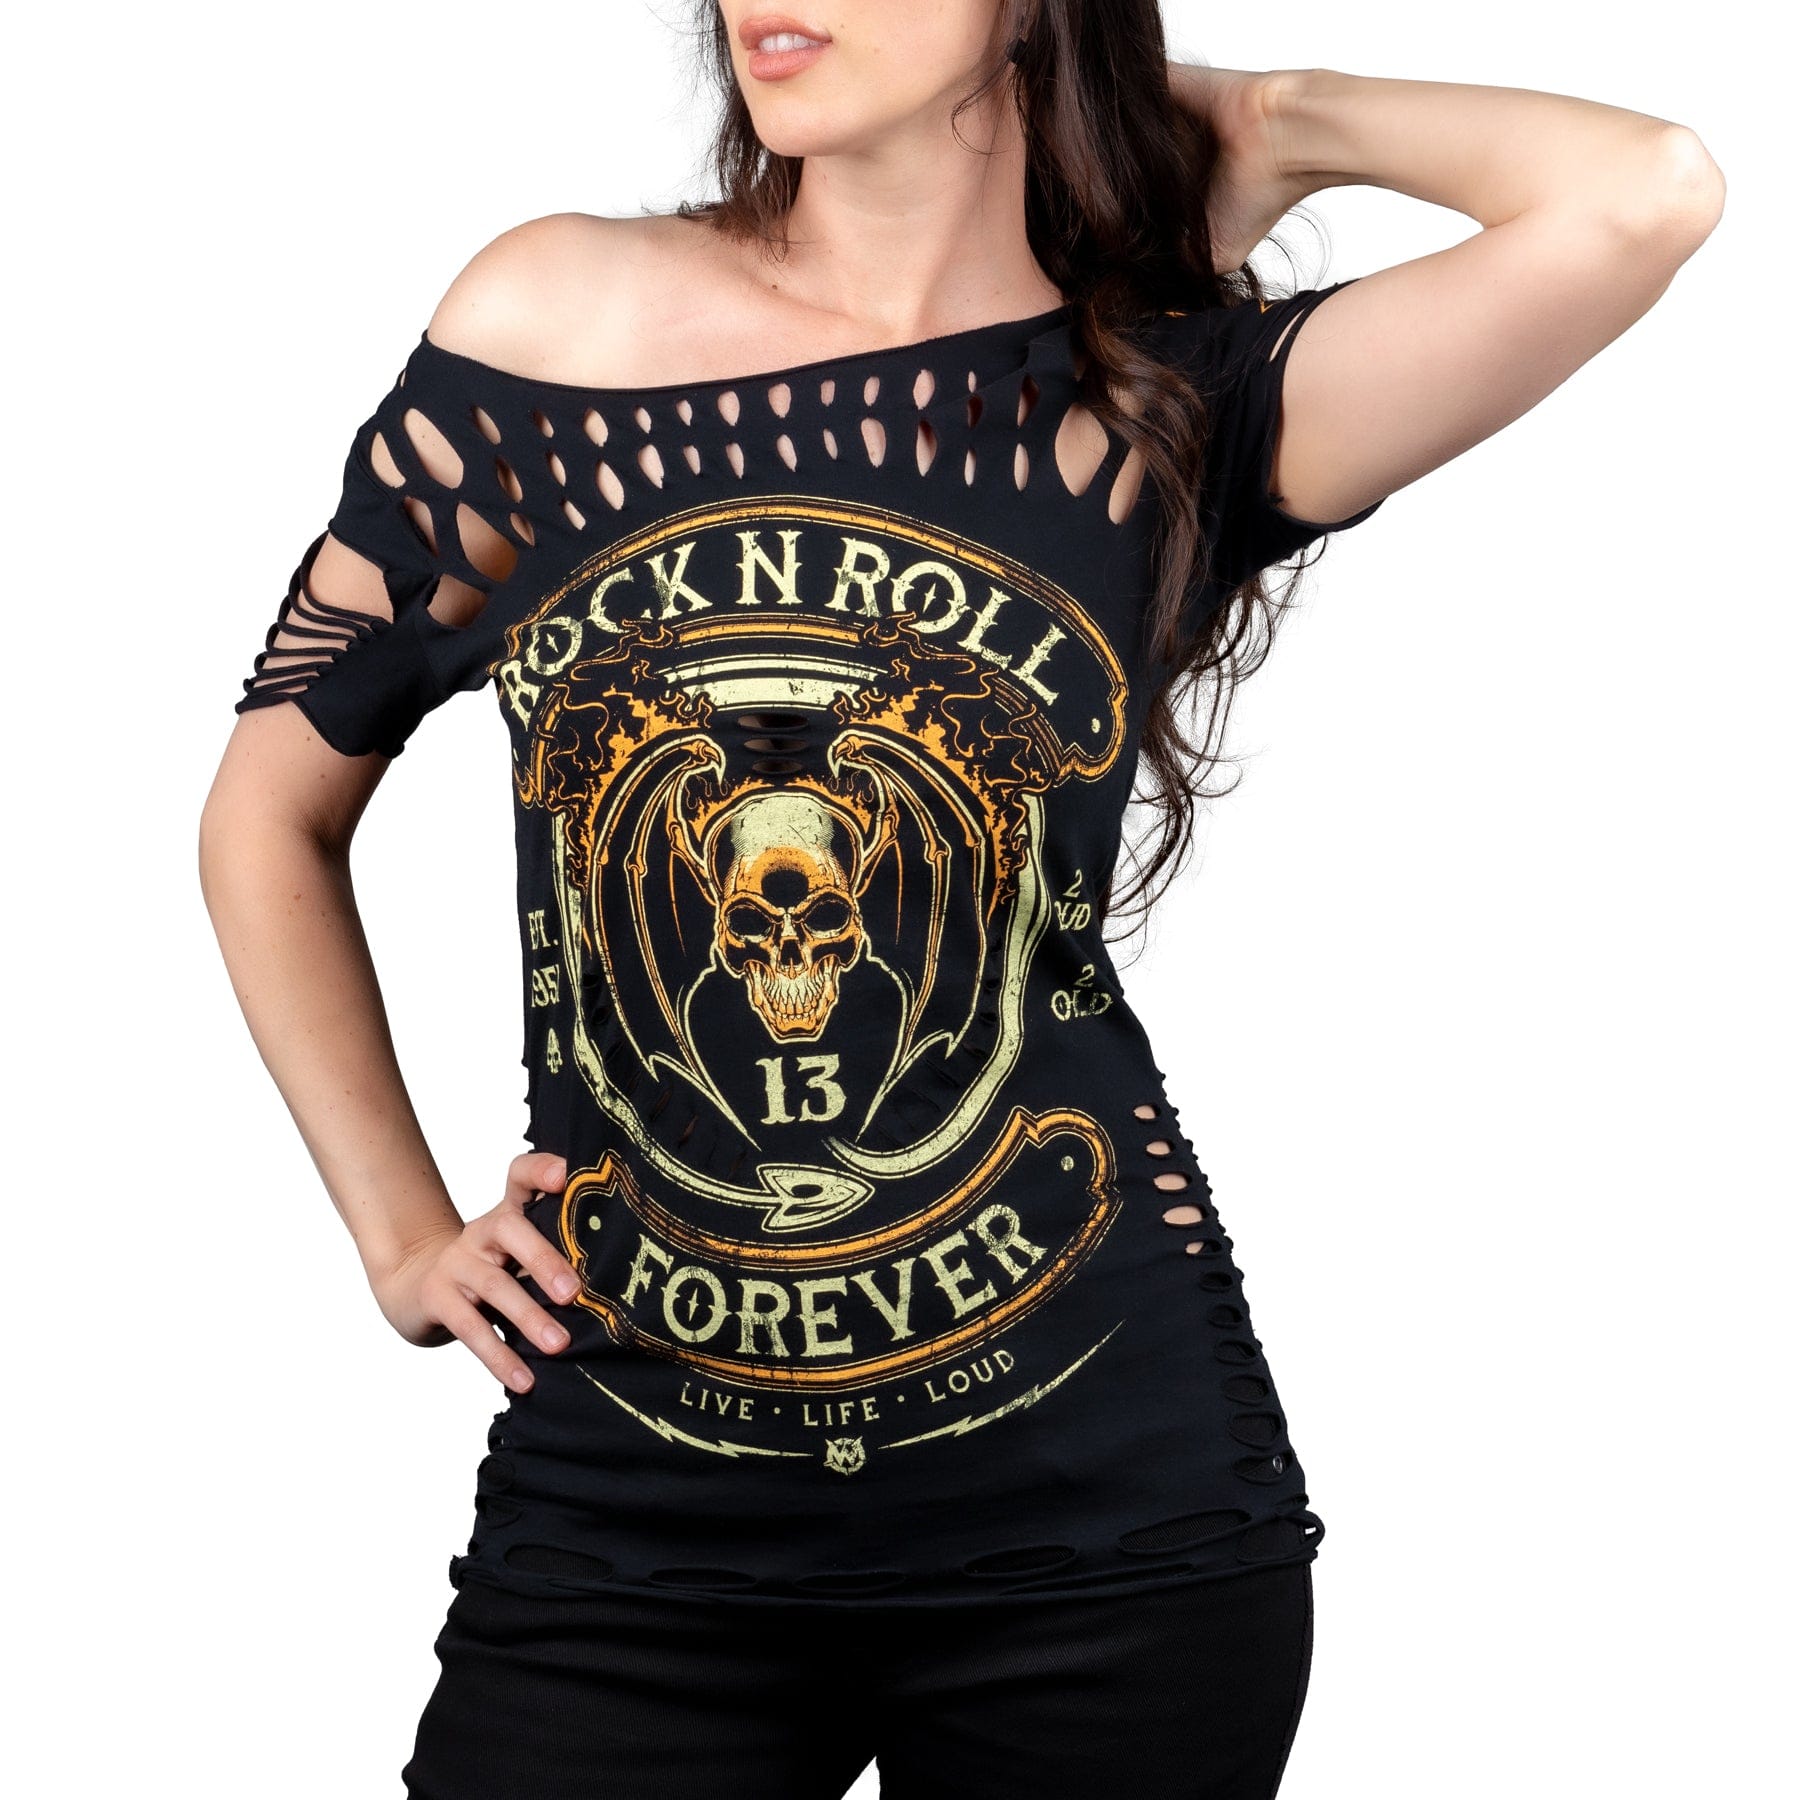 Wornstar Clothing Womens Tee. Rock N Roll Forever Cut T-Shirt